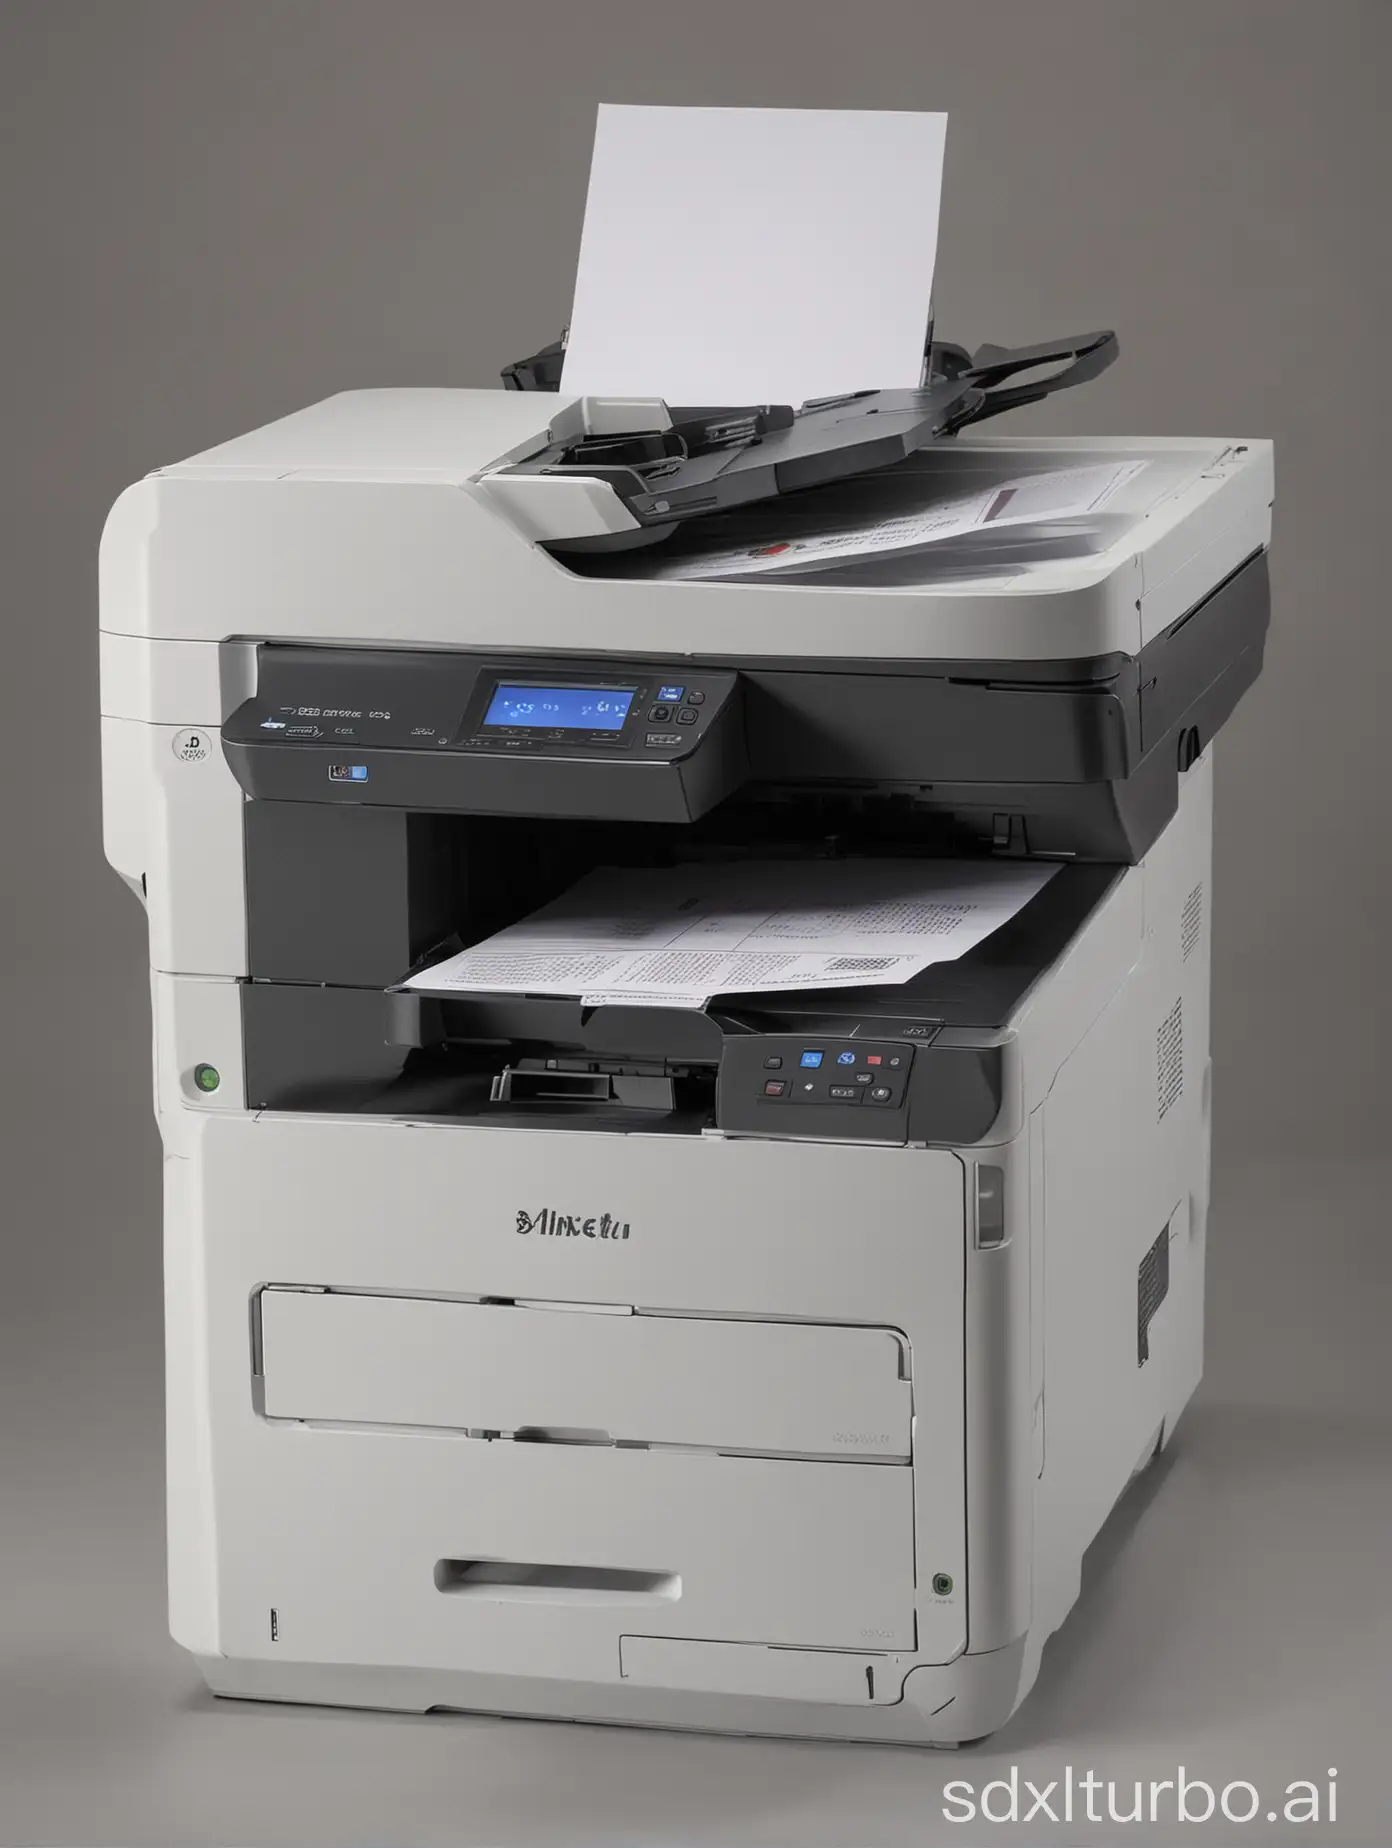 printer
